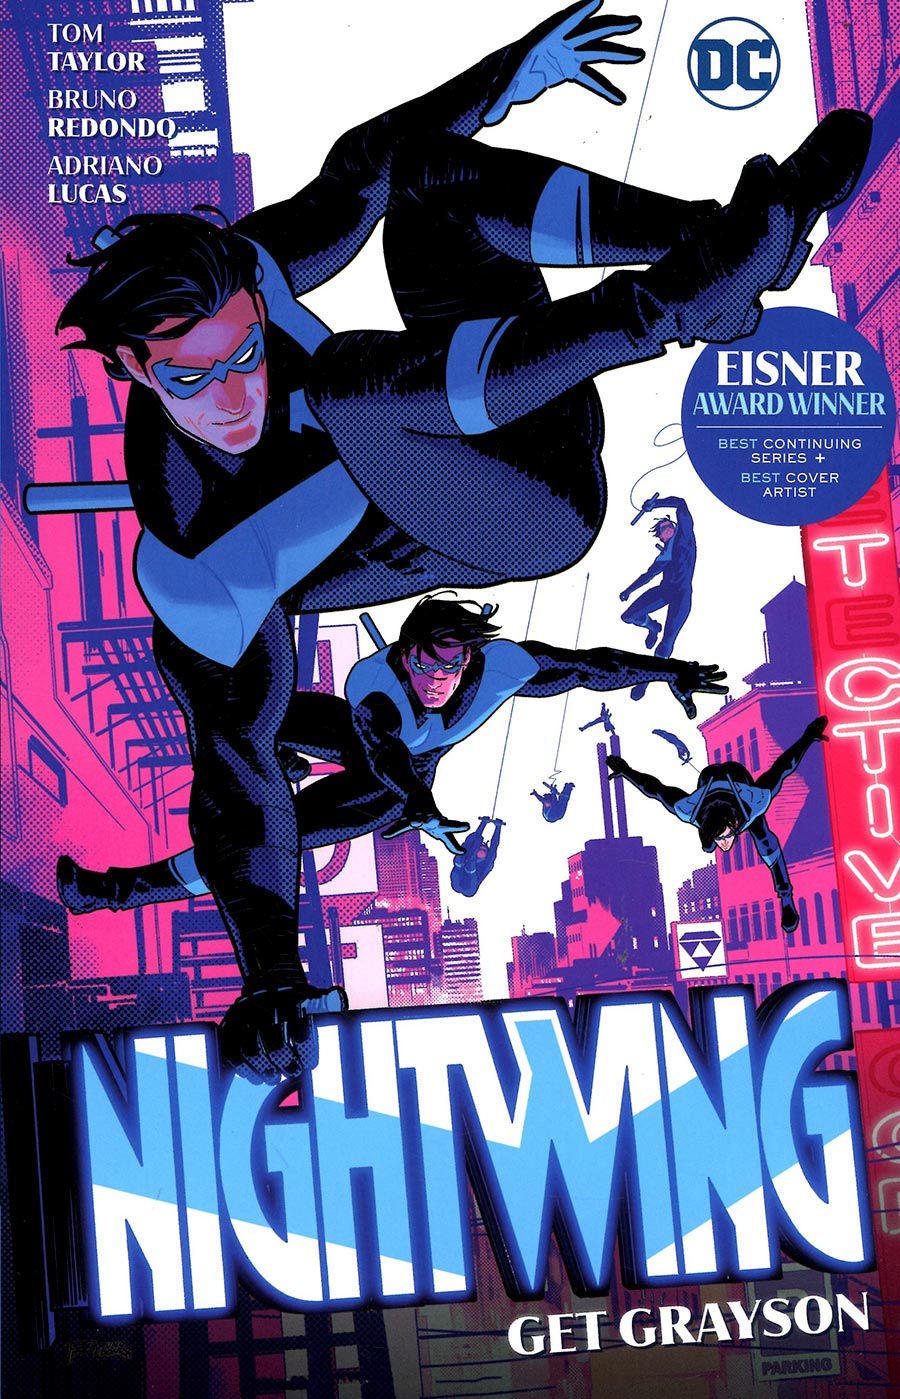 Nightwing (2021) Vol 2 Get Grayson TP